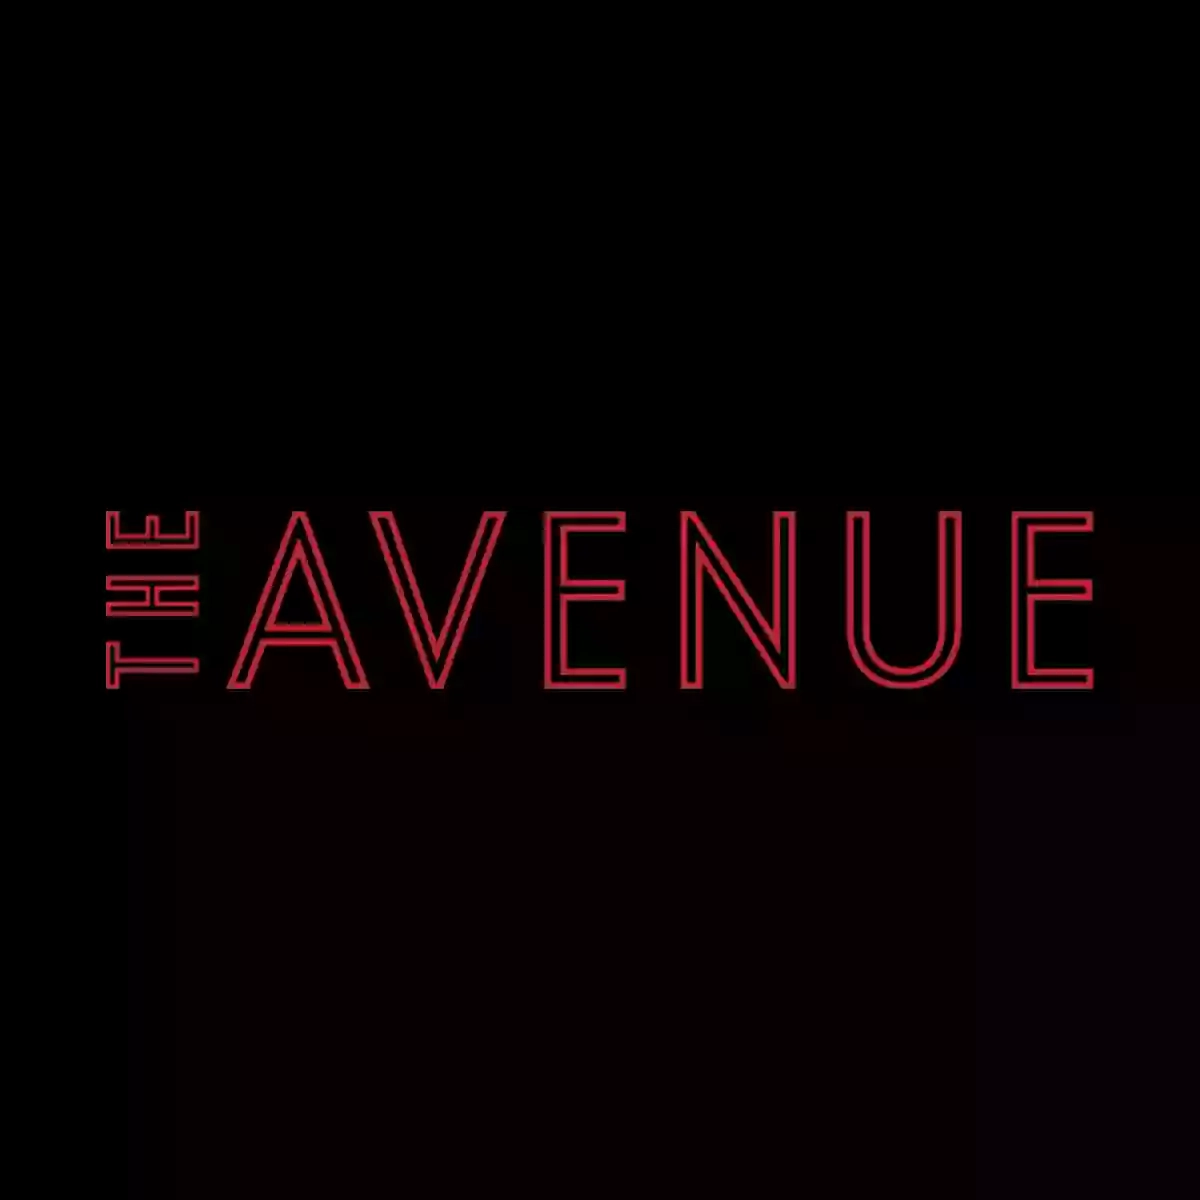 The Avenue Cinema